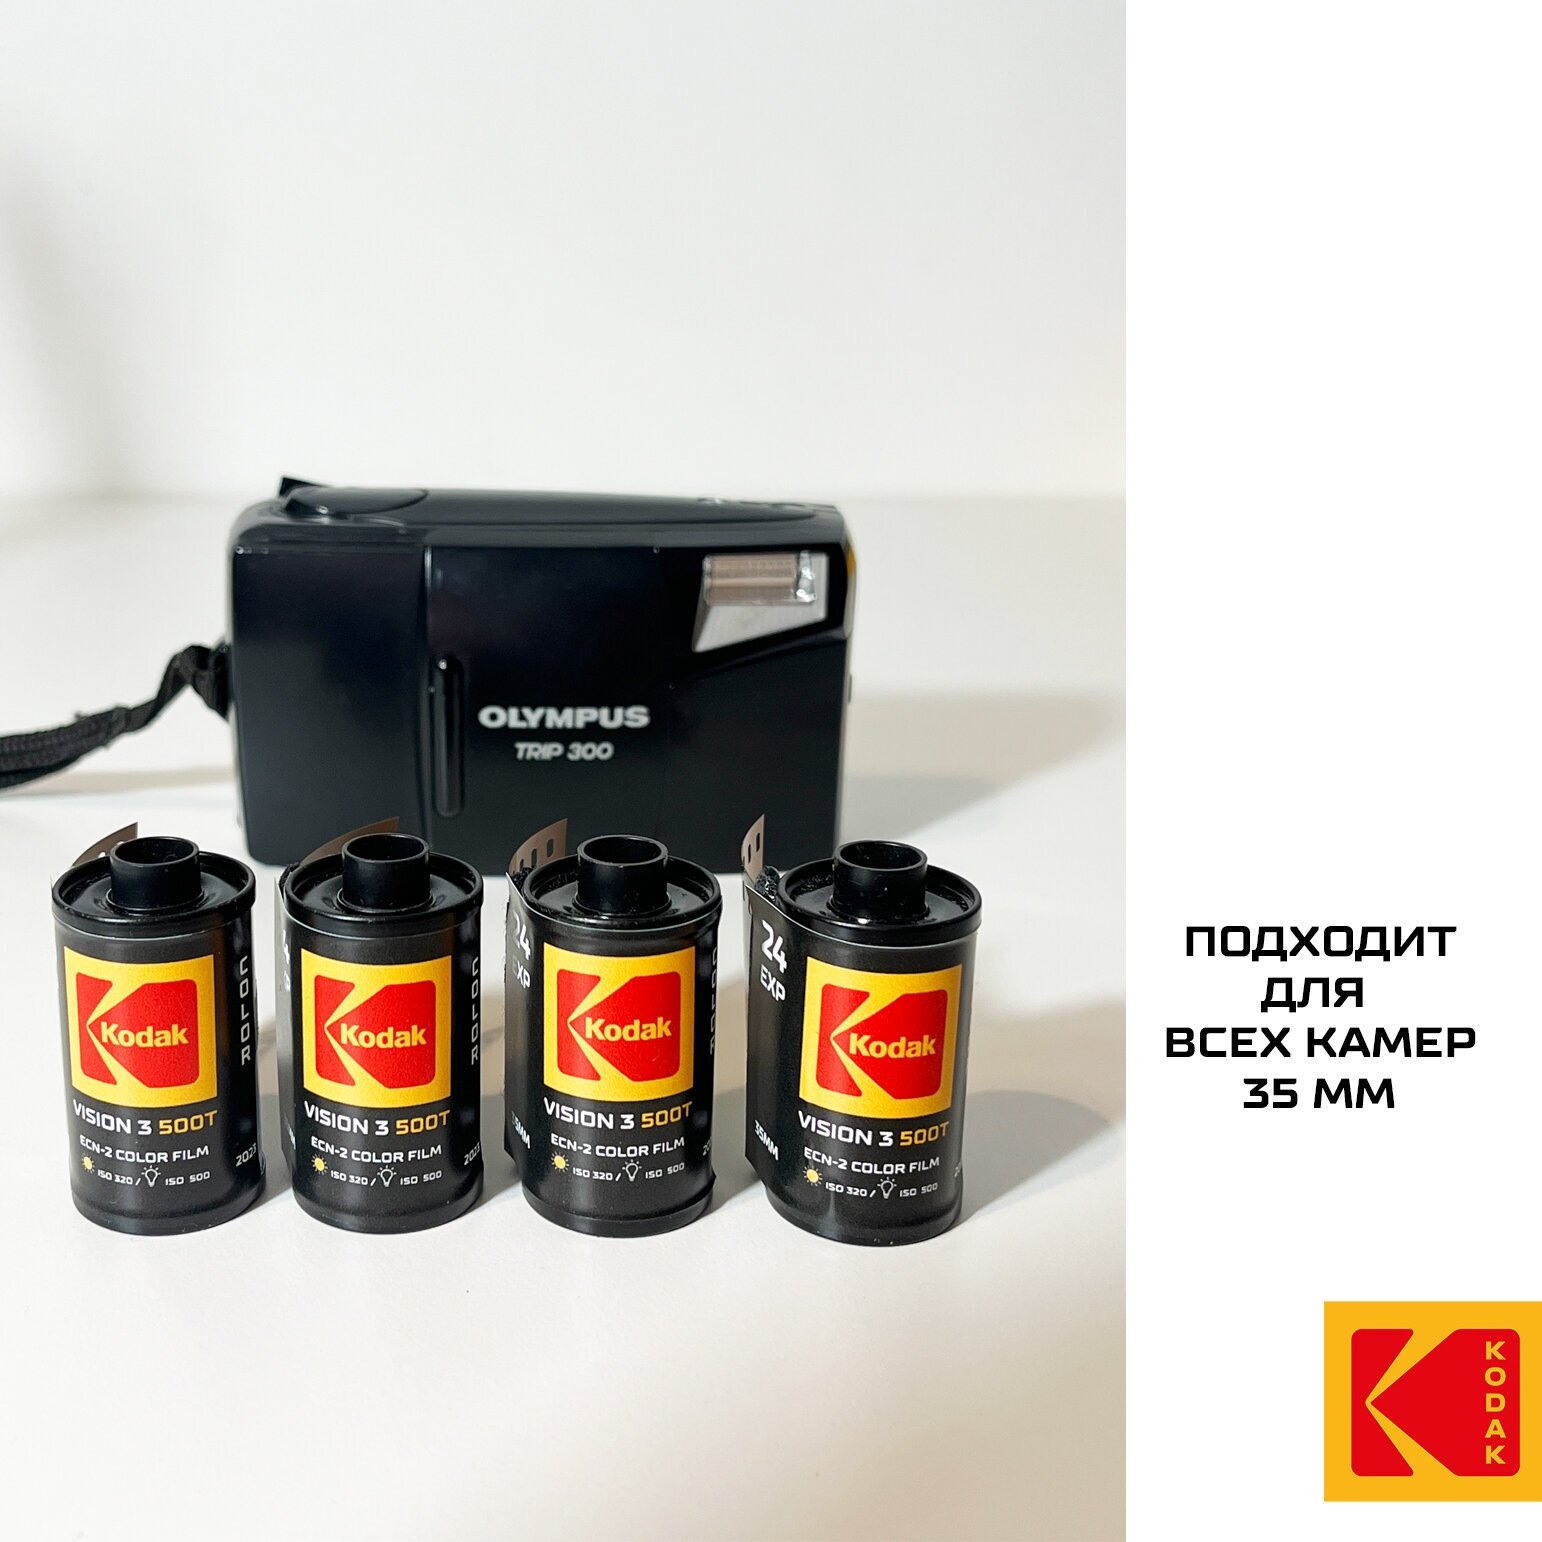 Kodak vision 3 500T / цветная фотопленка на 24 кадра